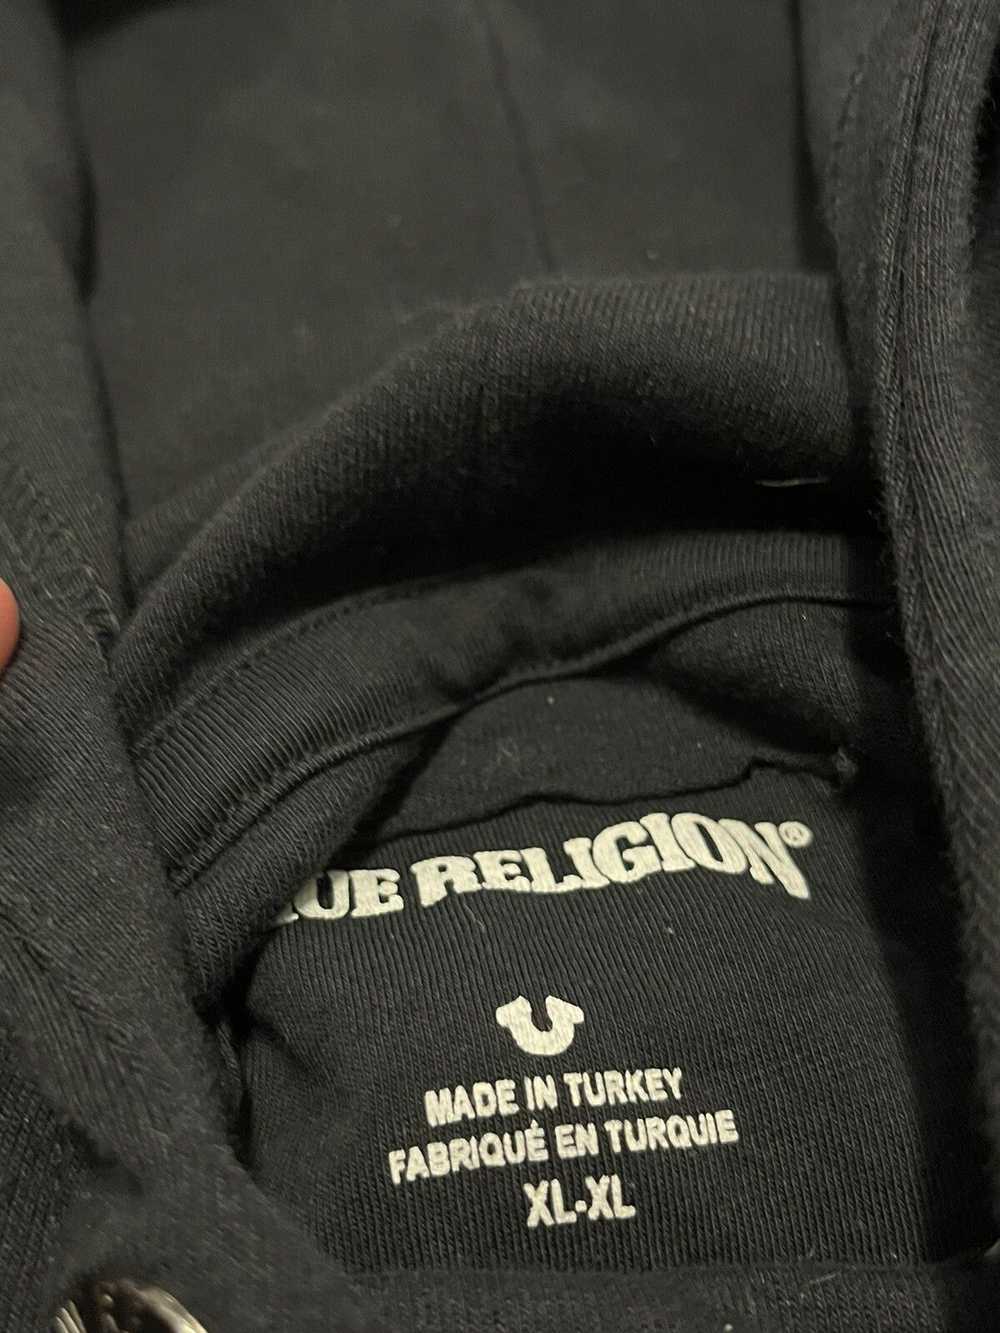 Streetwear × True Religion × Vintage True religio… - image 7